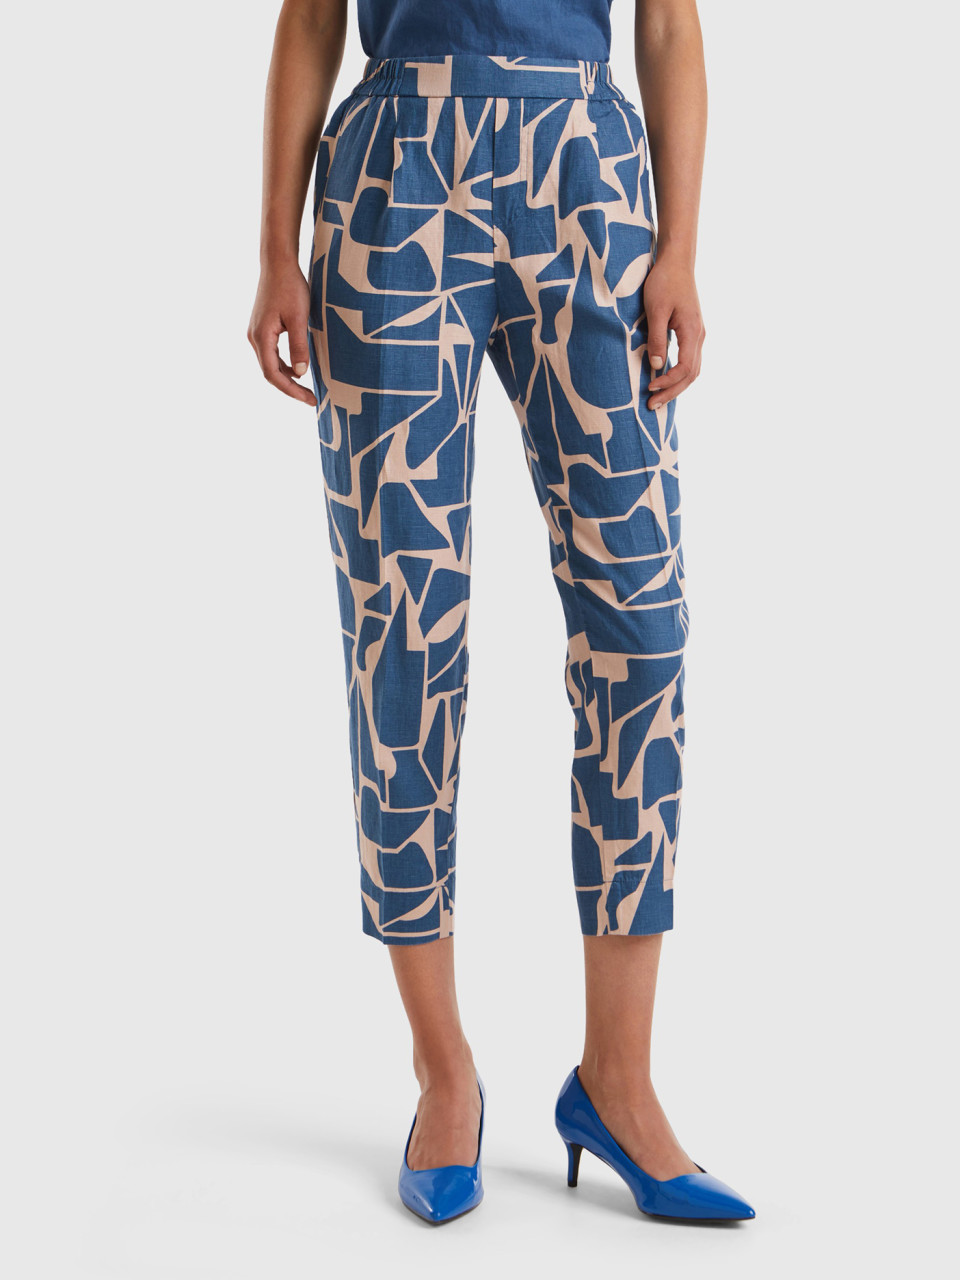 Benetton, Printed Linen Trousers, Air Force Blue, Women